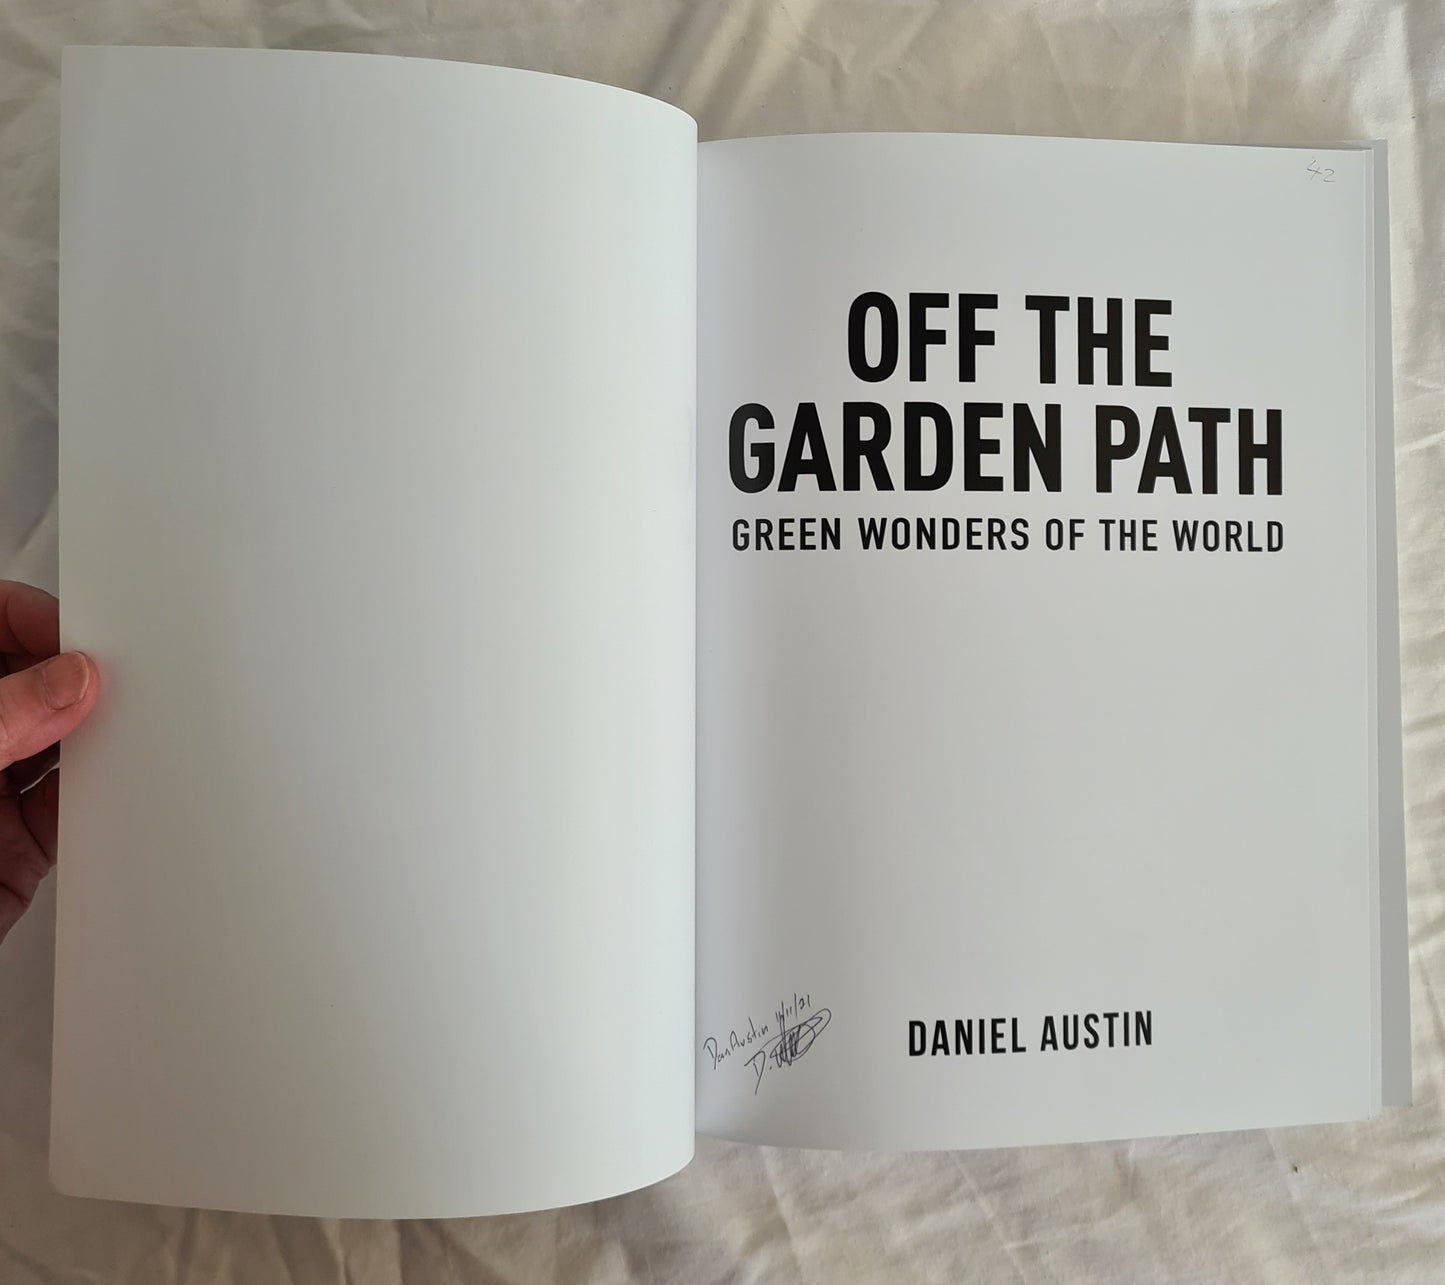 Off The Garden Path by Daniel Austin